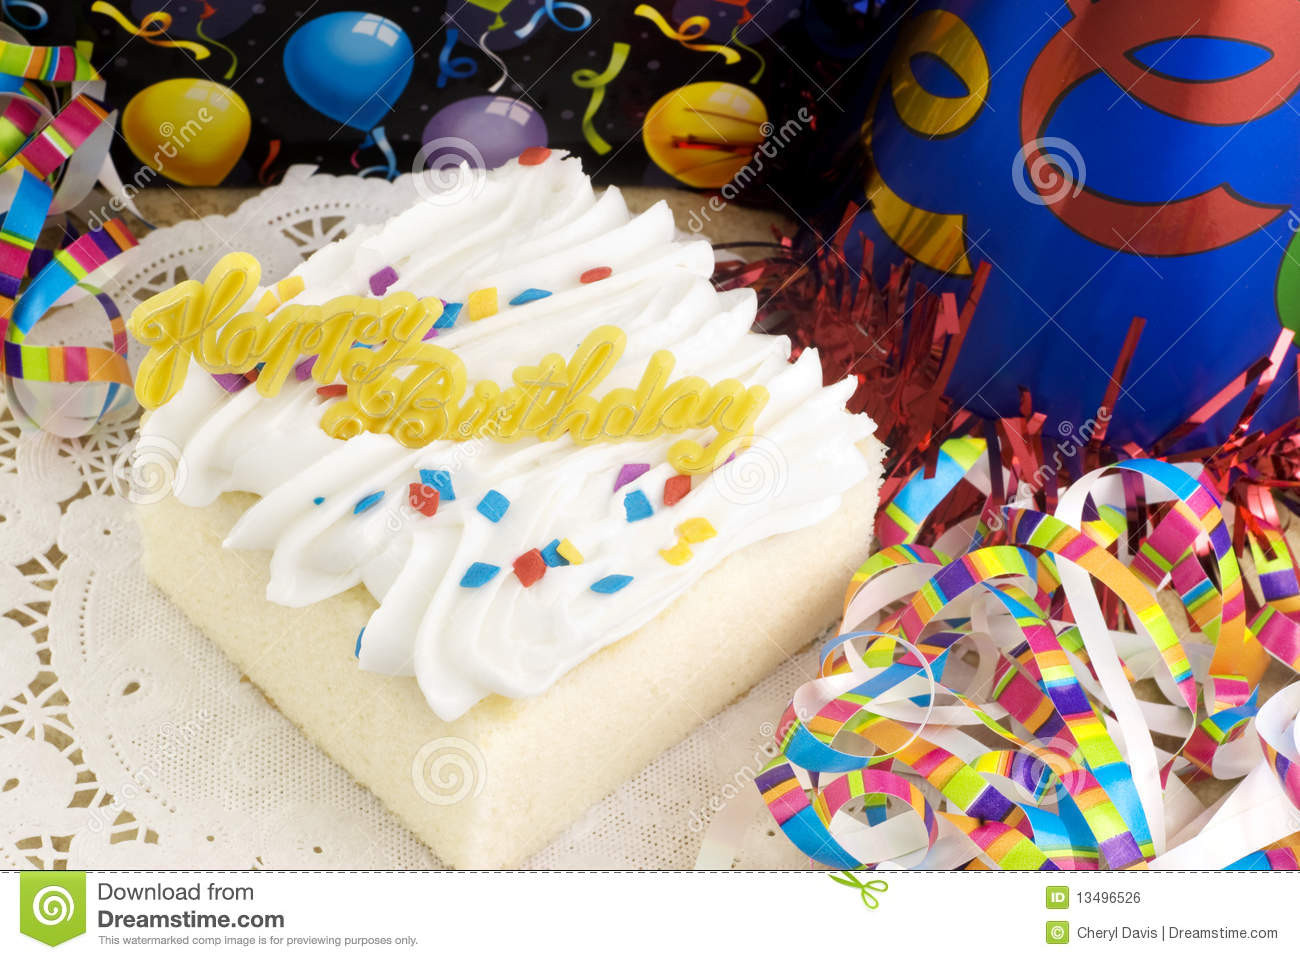 Happy Birthday Cake Decorations
 Happy Birthday Cake With Decorations Royalty Free Stock